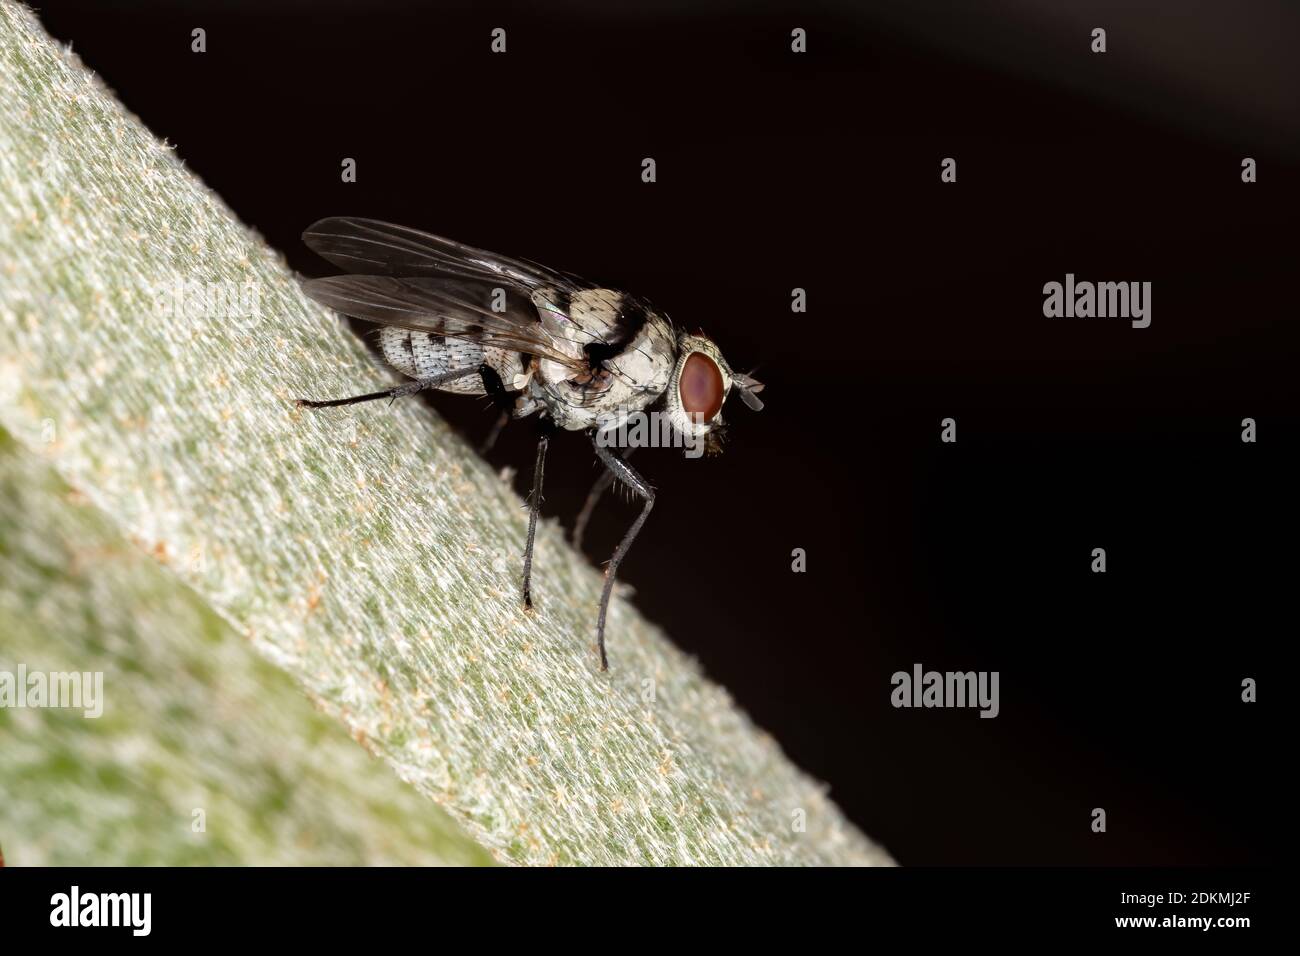 Root-maggot Fly of the species Anthomyia illocata Stock Photo